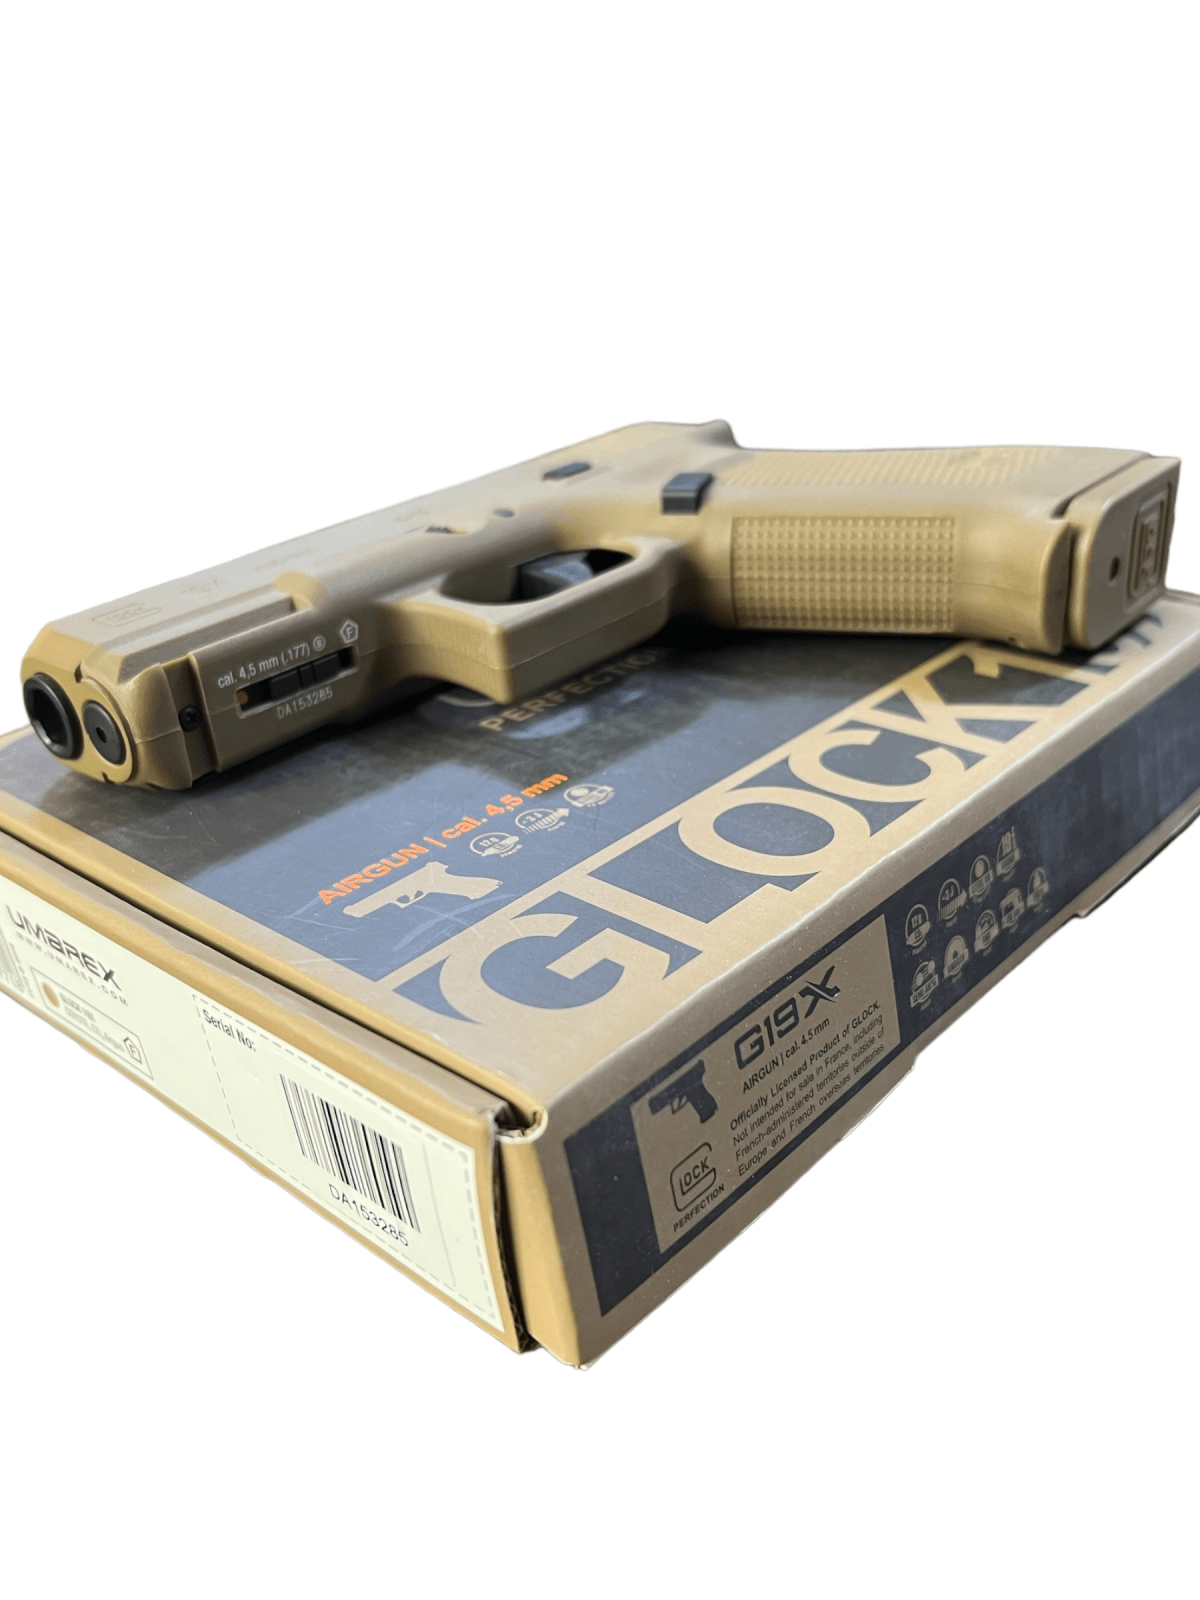 Glock 19x Umarex Certificada Blowback ARC12